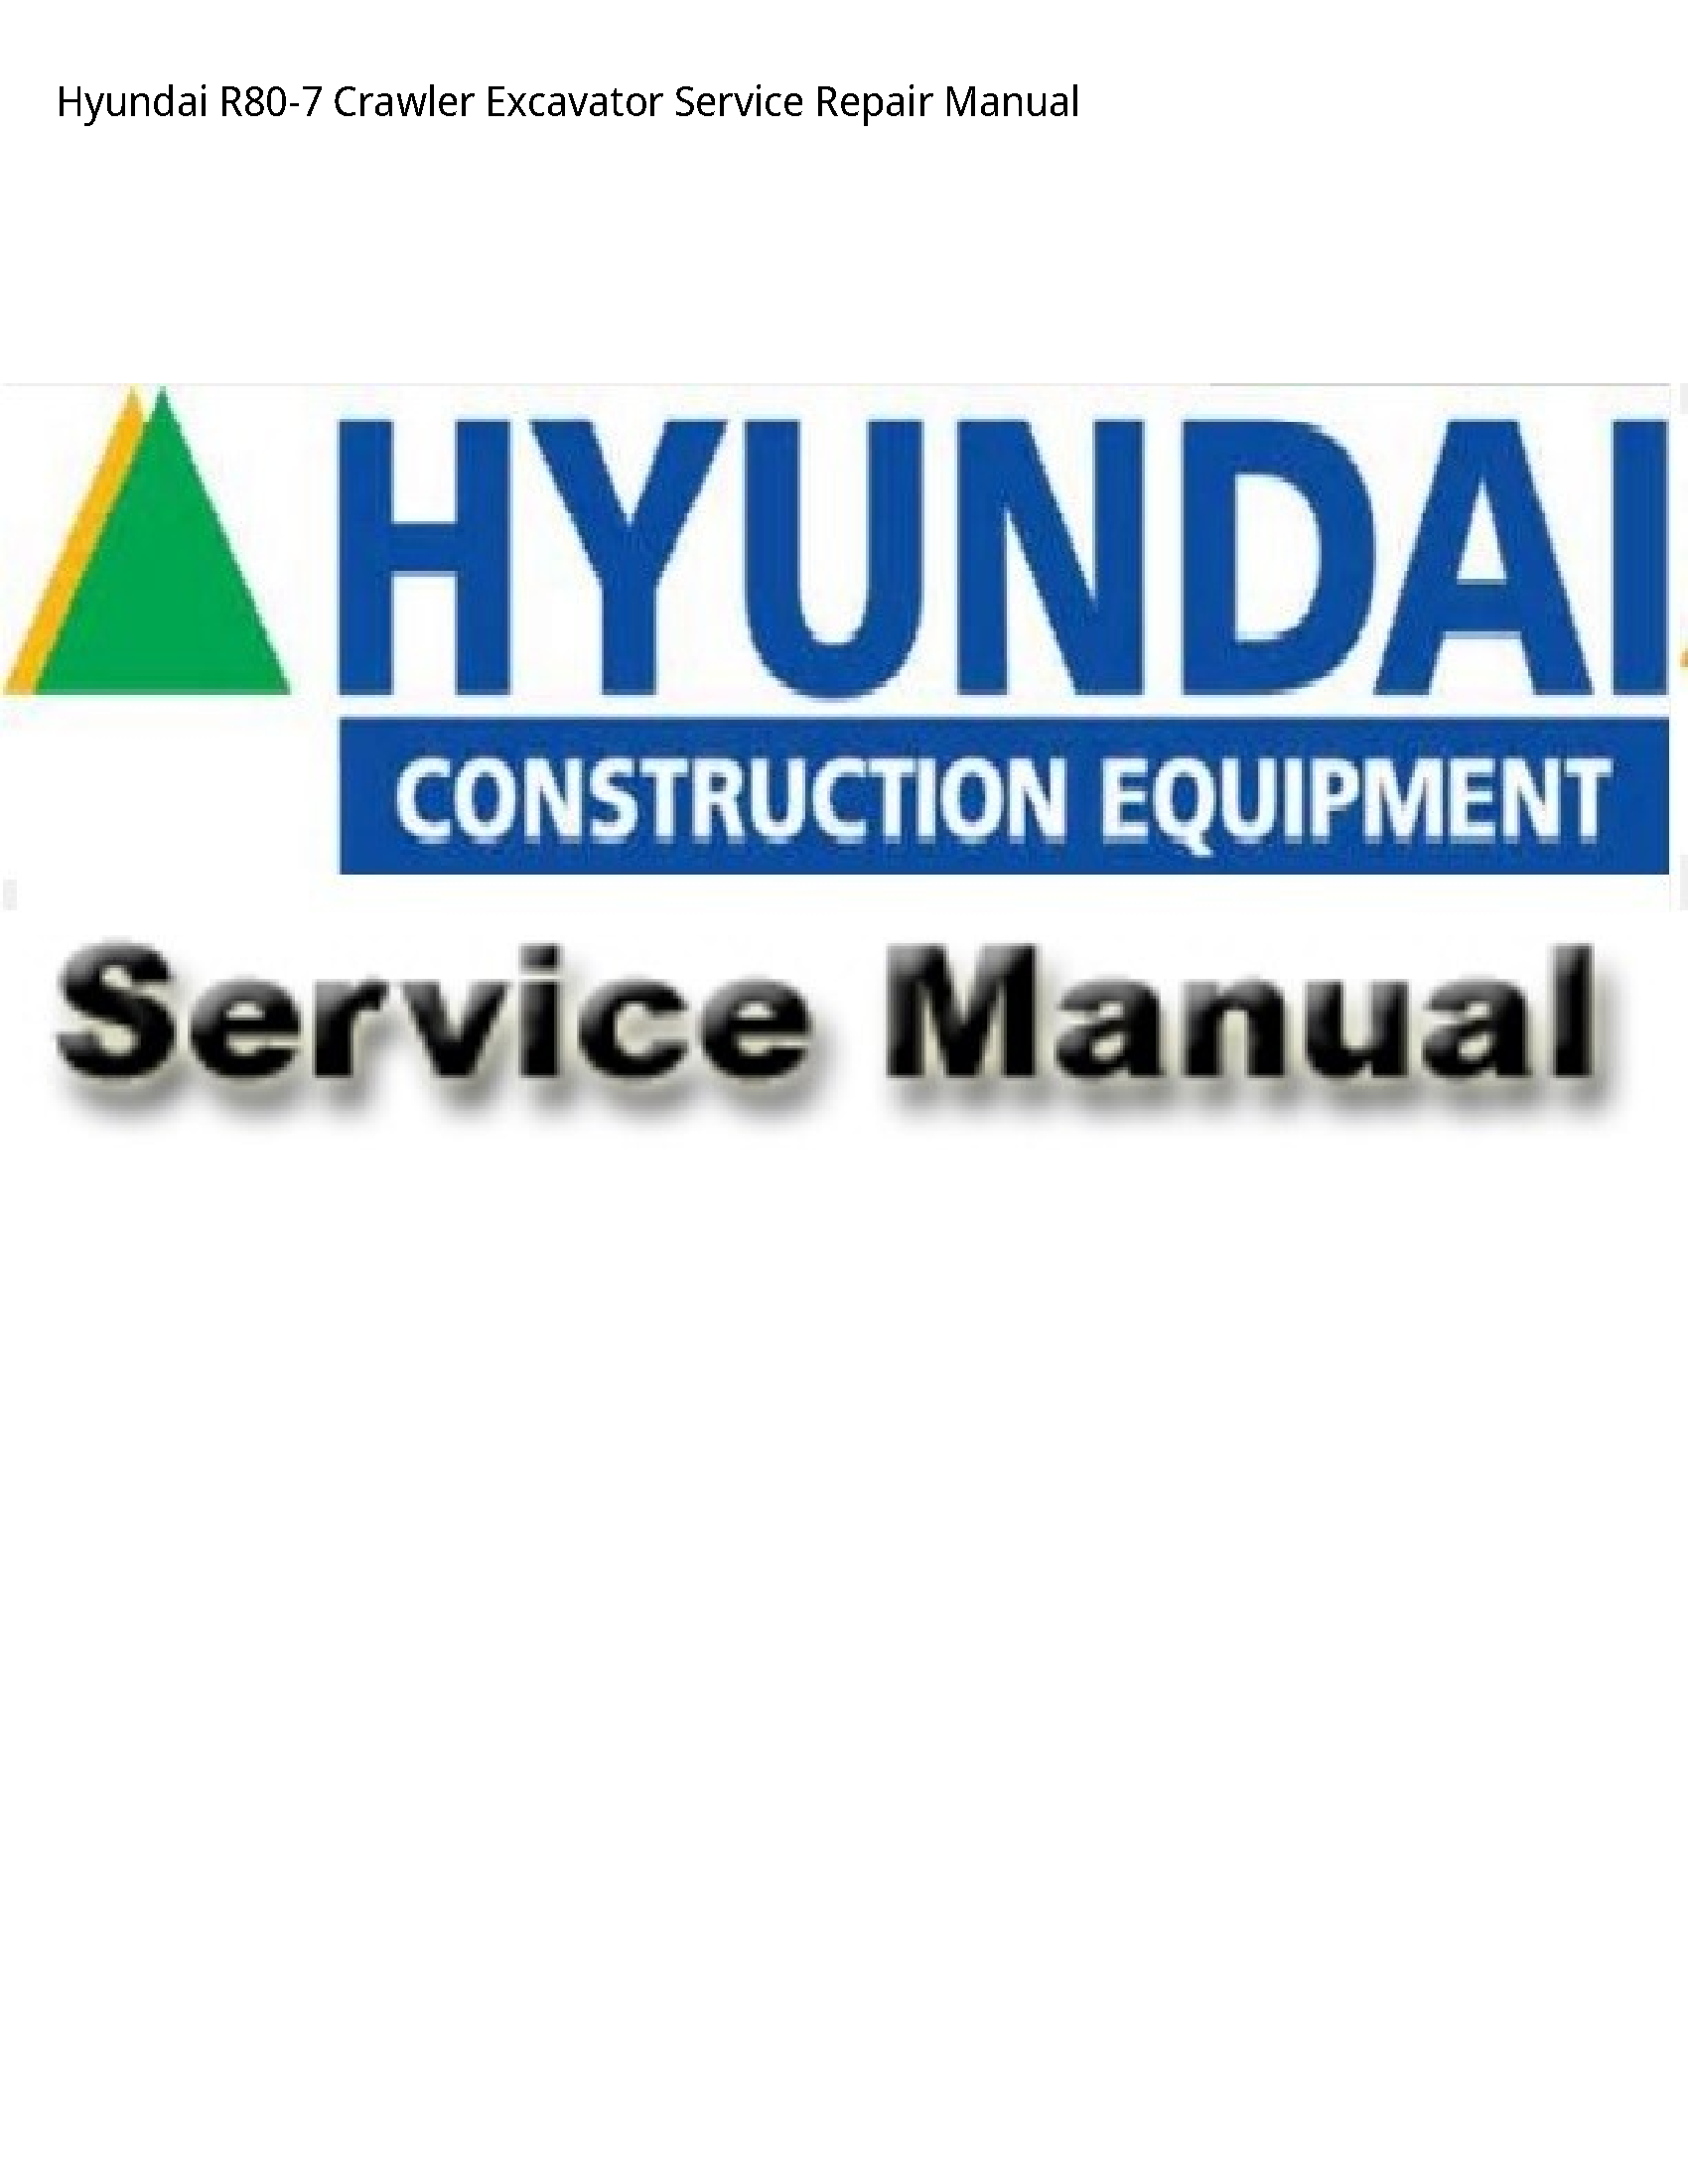 Hyundai R80-7 Crawler Excavator manual